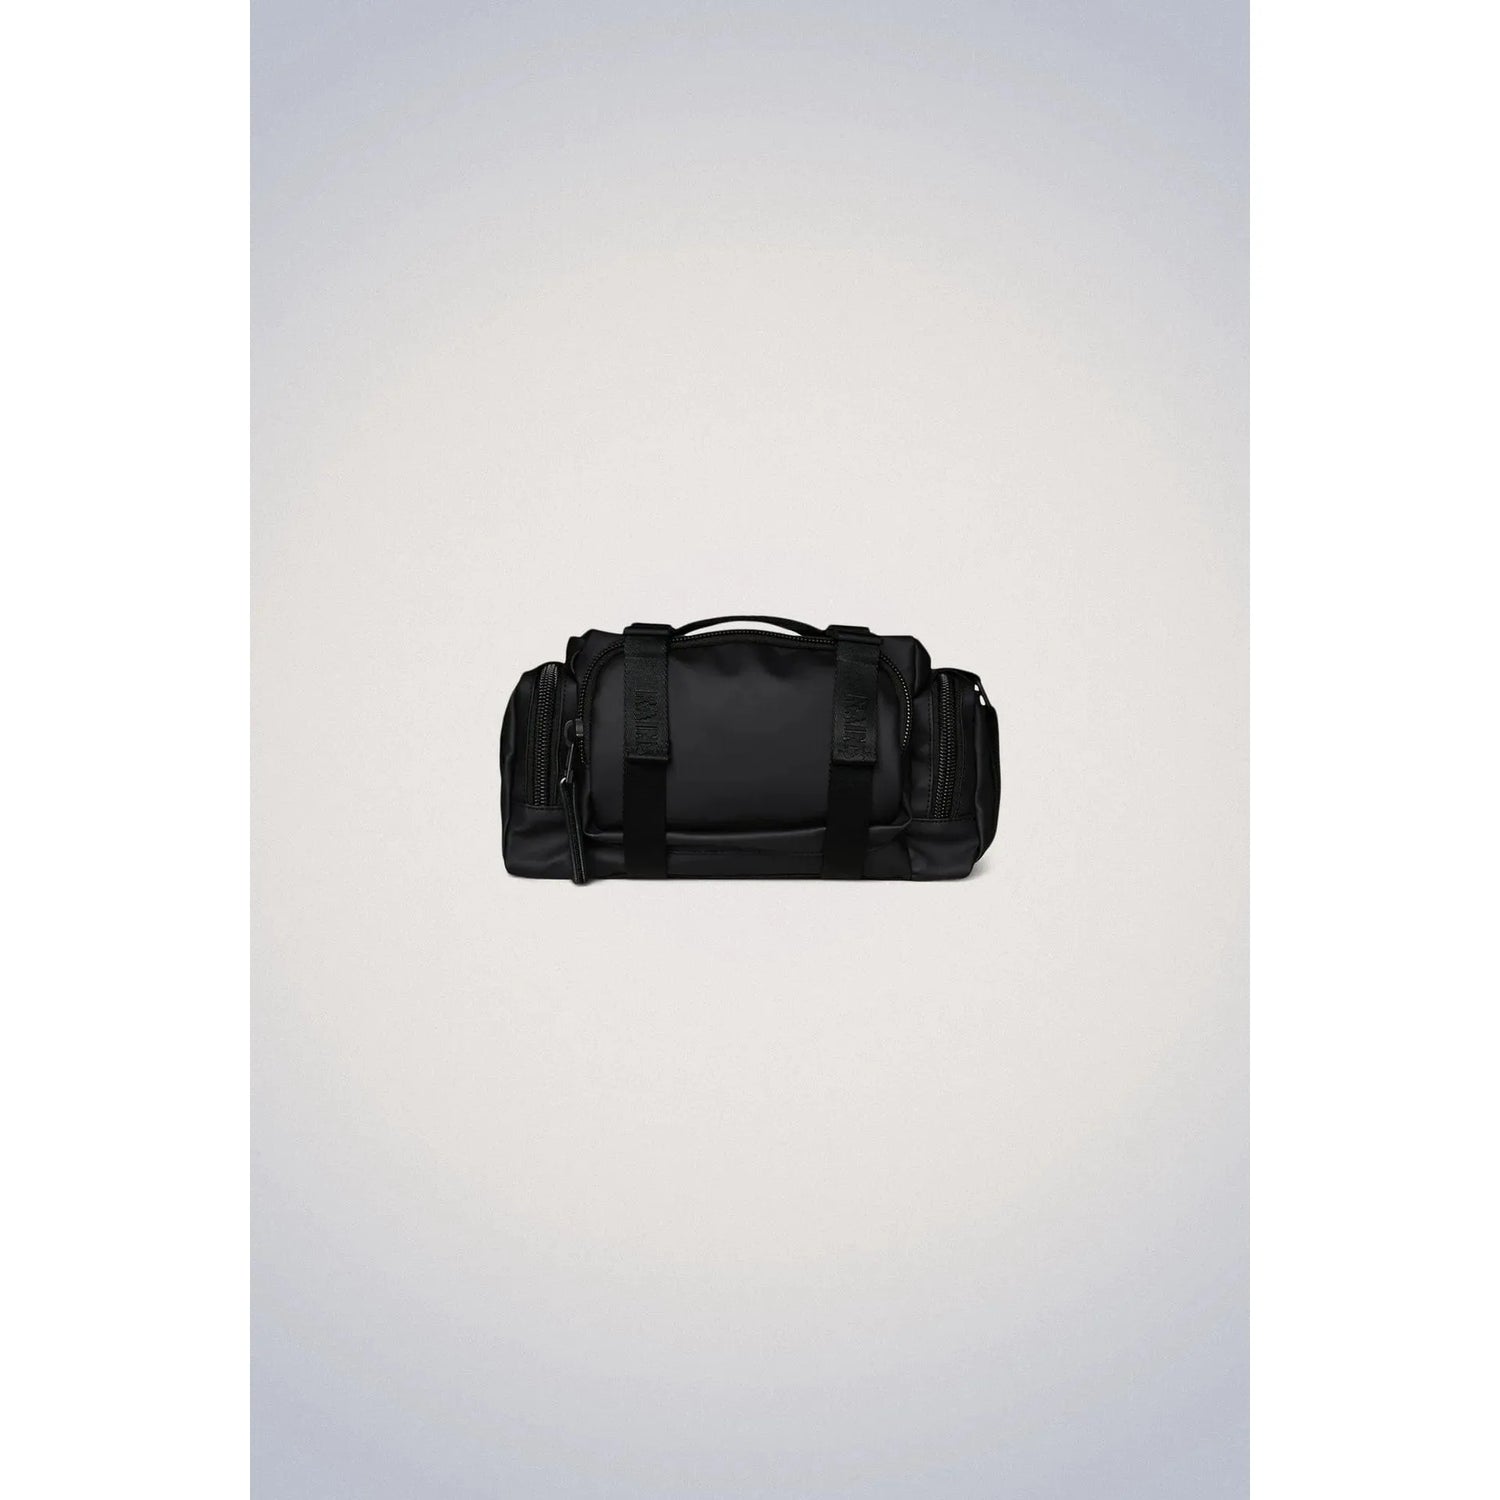 RAINS Crossbody Bag H6.3 x W11.8 x D3.1 inches / Black / Polyester RAINS Trail Crossbody Bag